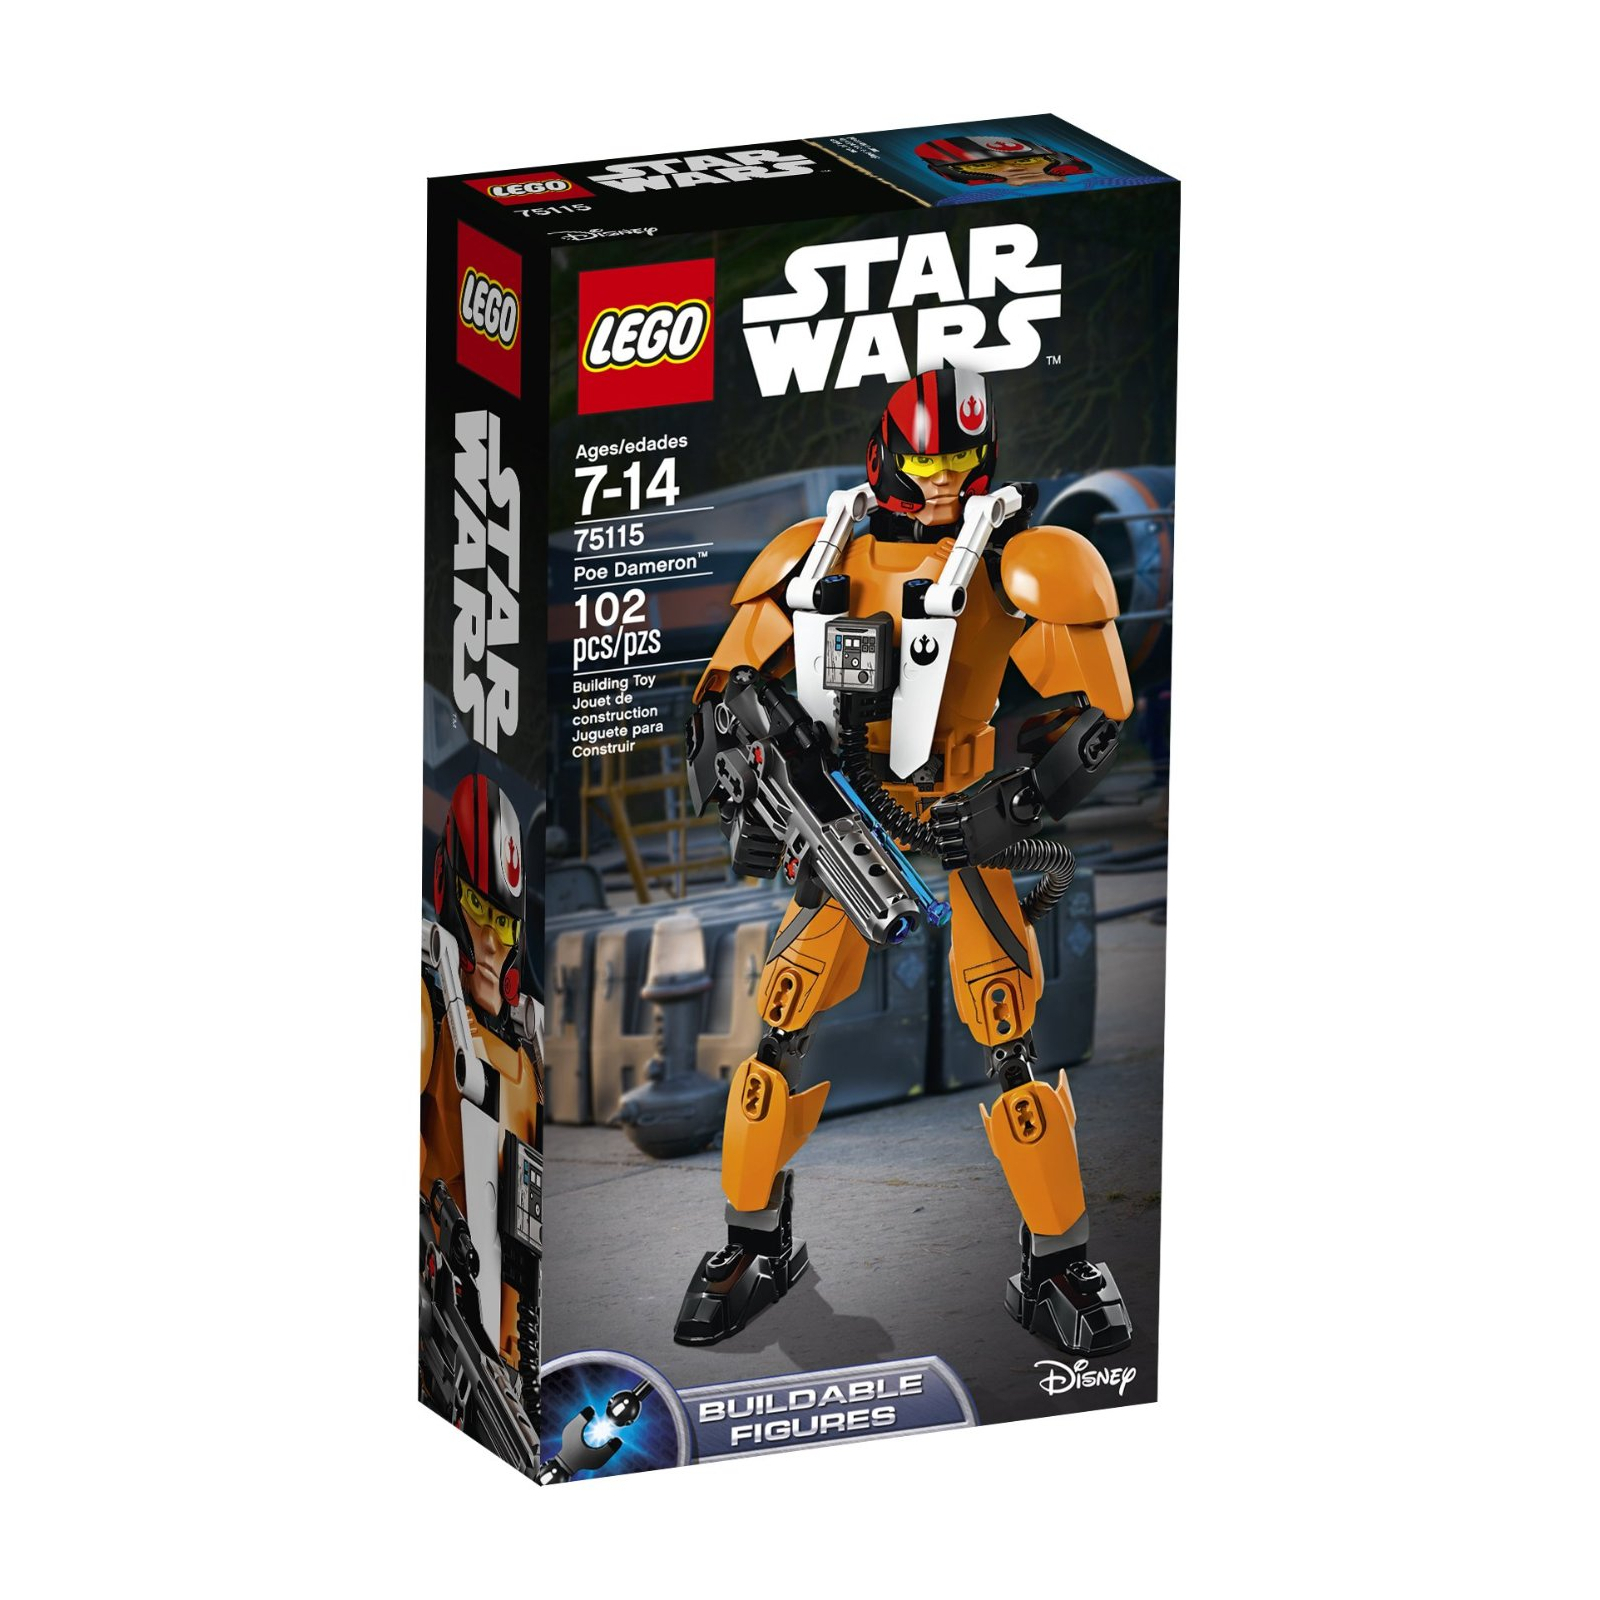 Конструктор LEGO Star Wars По Демерон (75115)